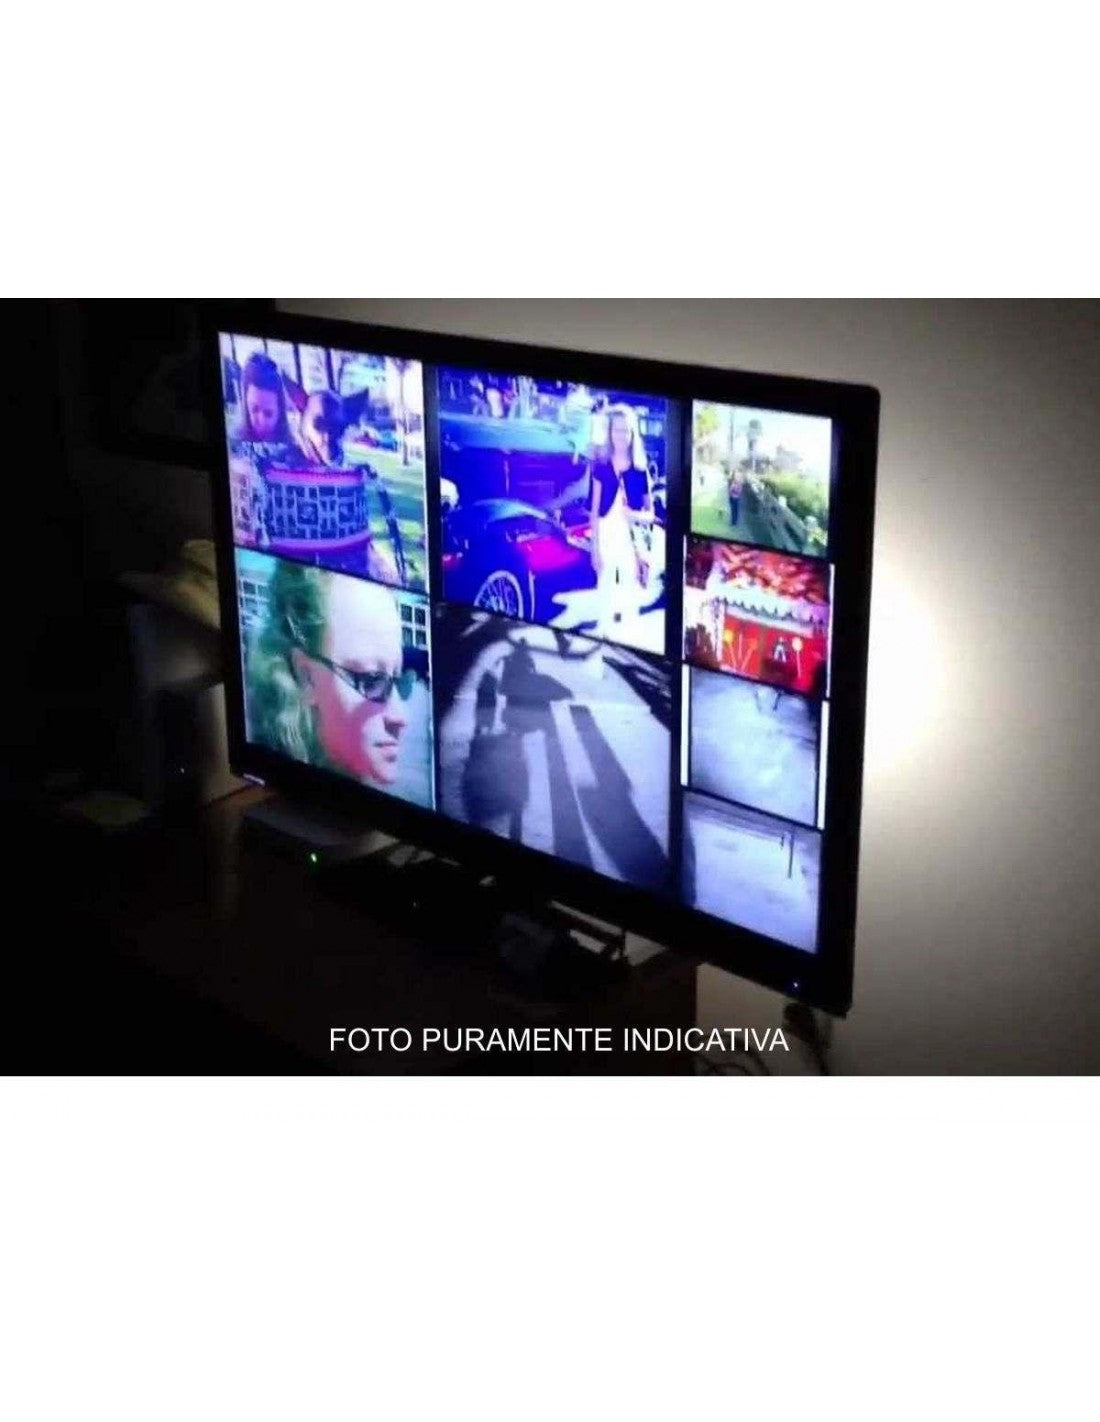 Jolight Kit 2 strisce led luminose da 60 cm per retroilluminazione televisione, colore luce bianco caldo